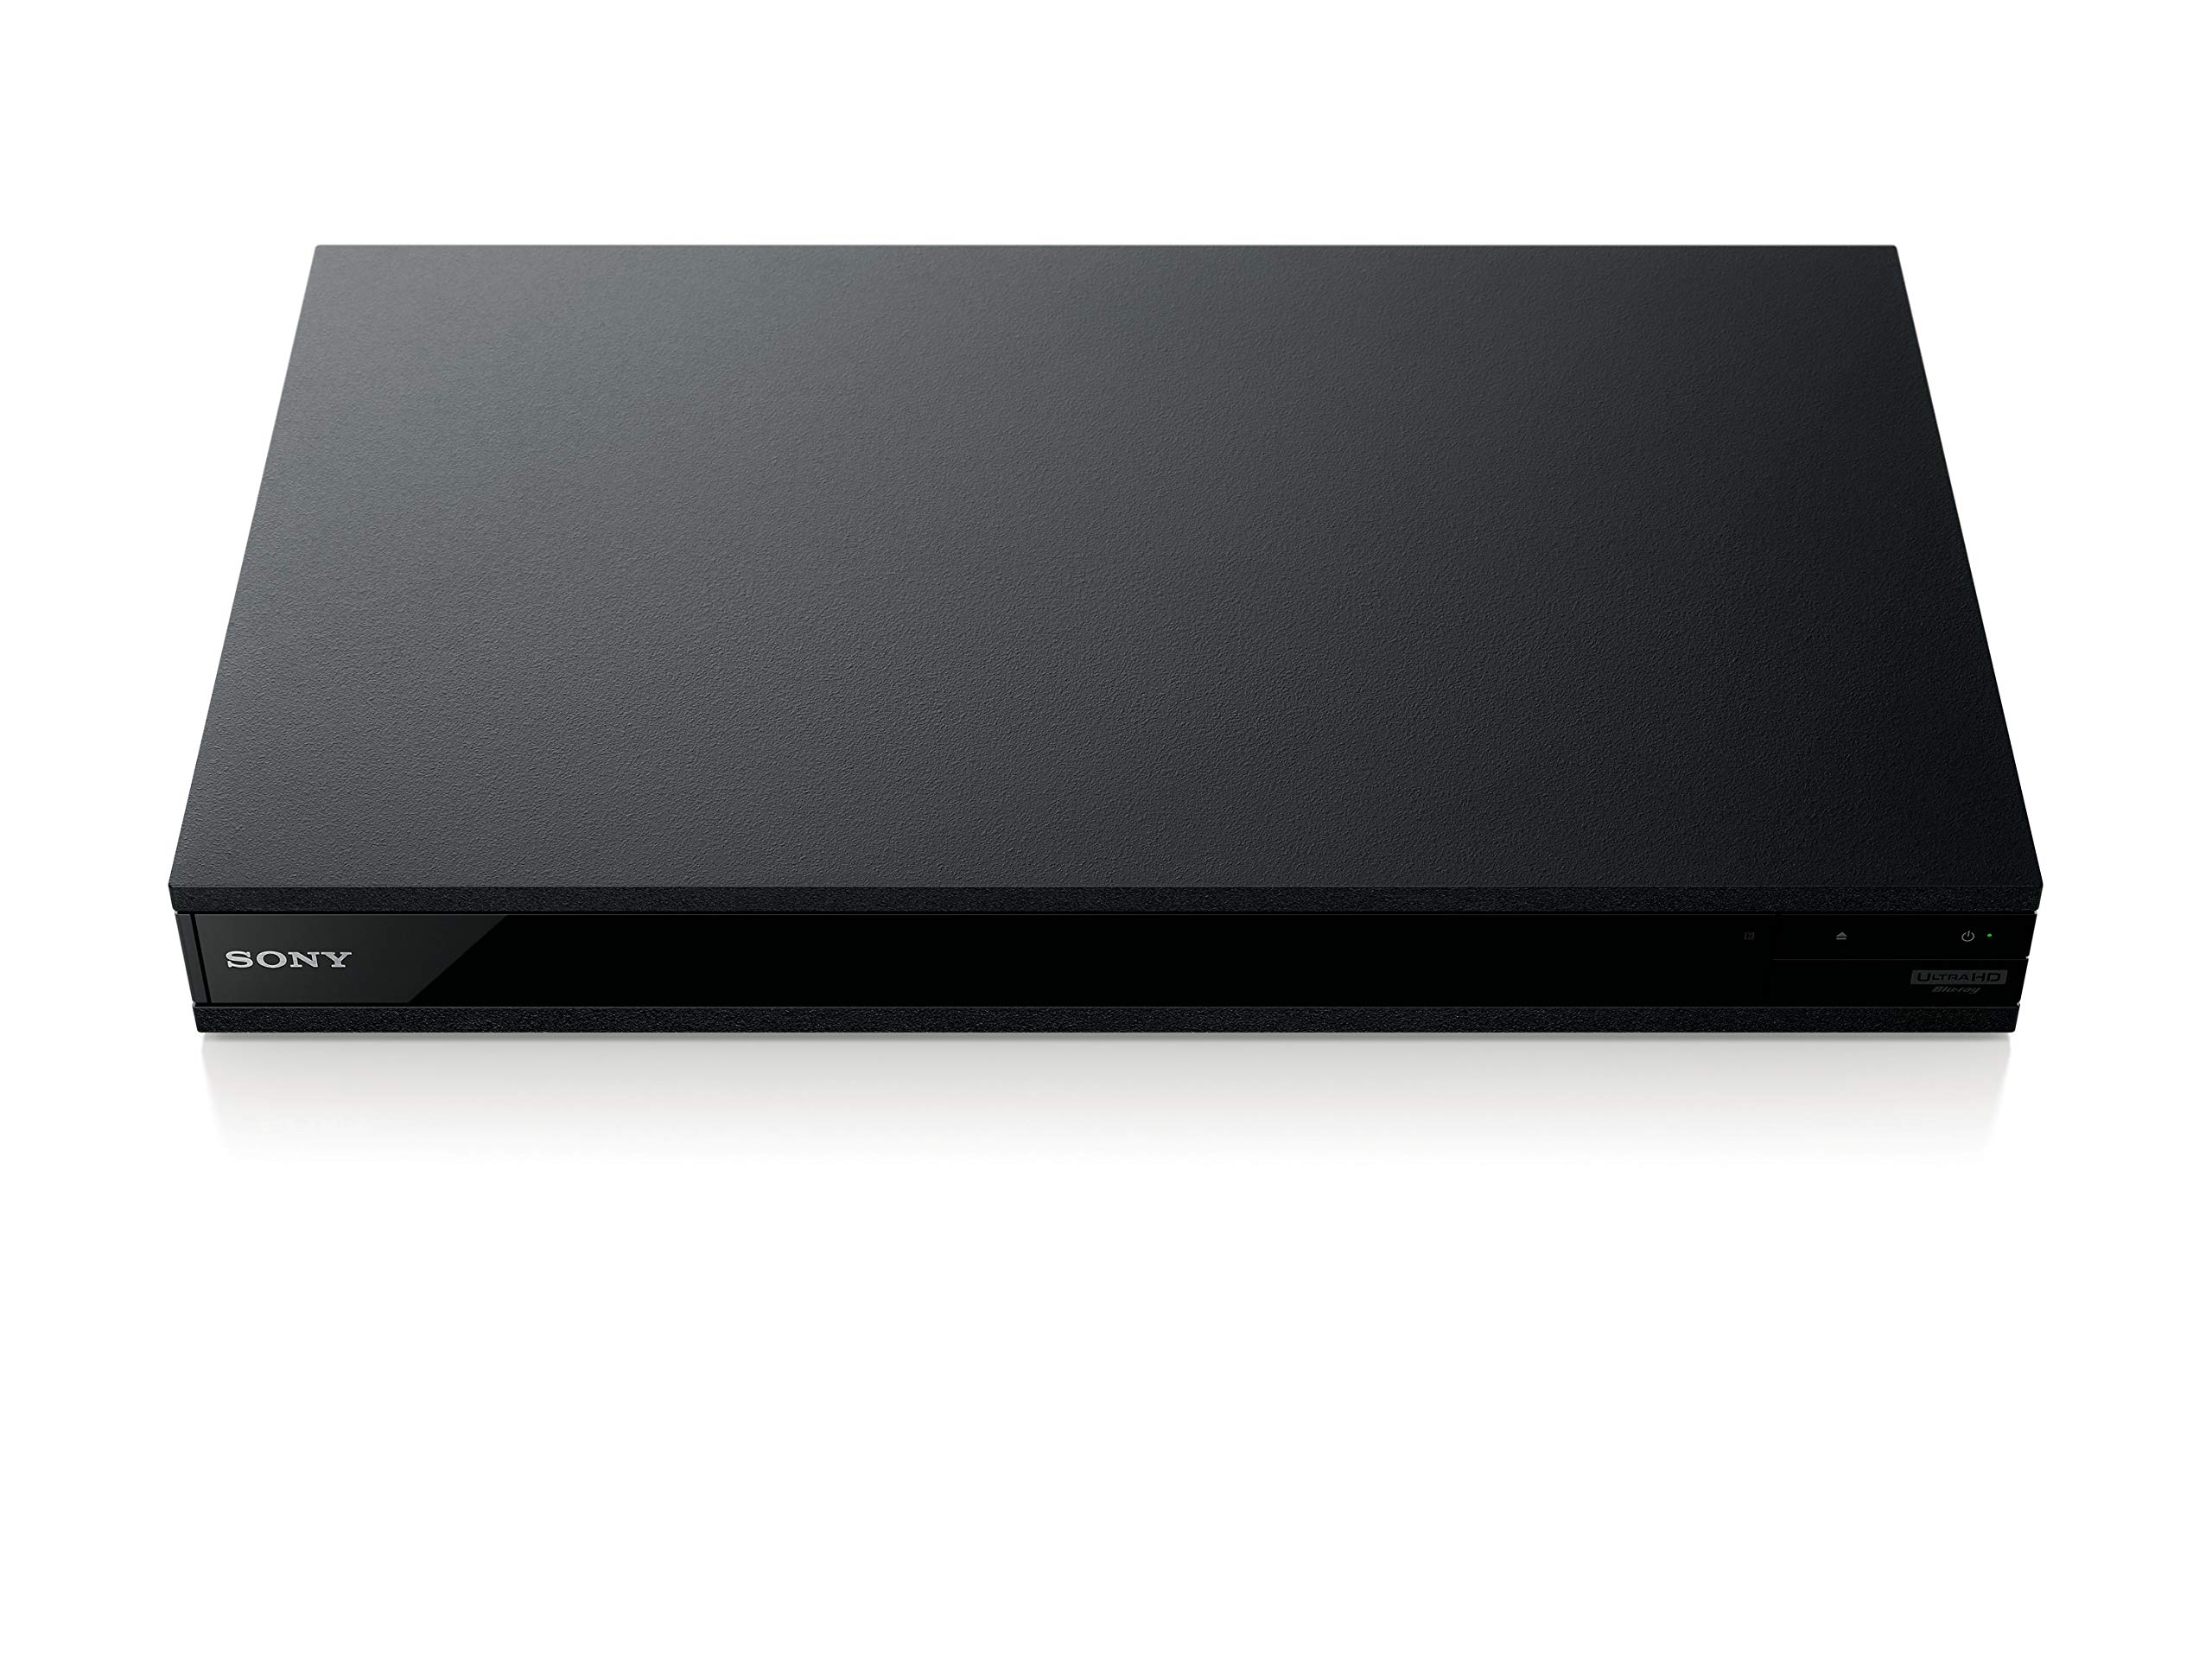 Sony UBP-X800M2 4K UHD Home Theater Streaming Blu-Ray Disc Player (UBPX800M2), Black